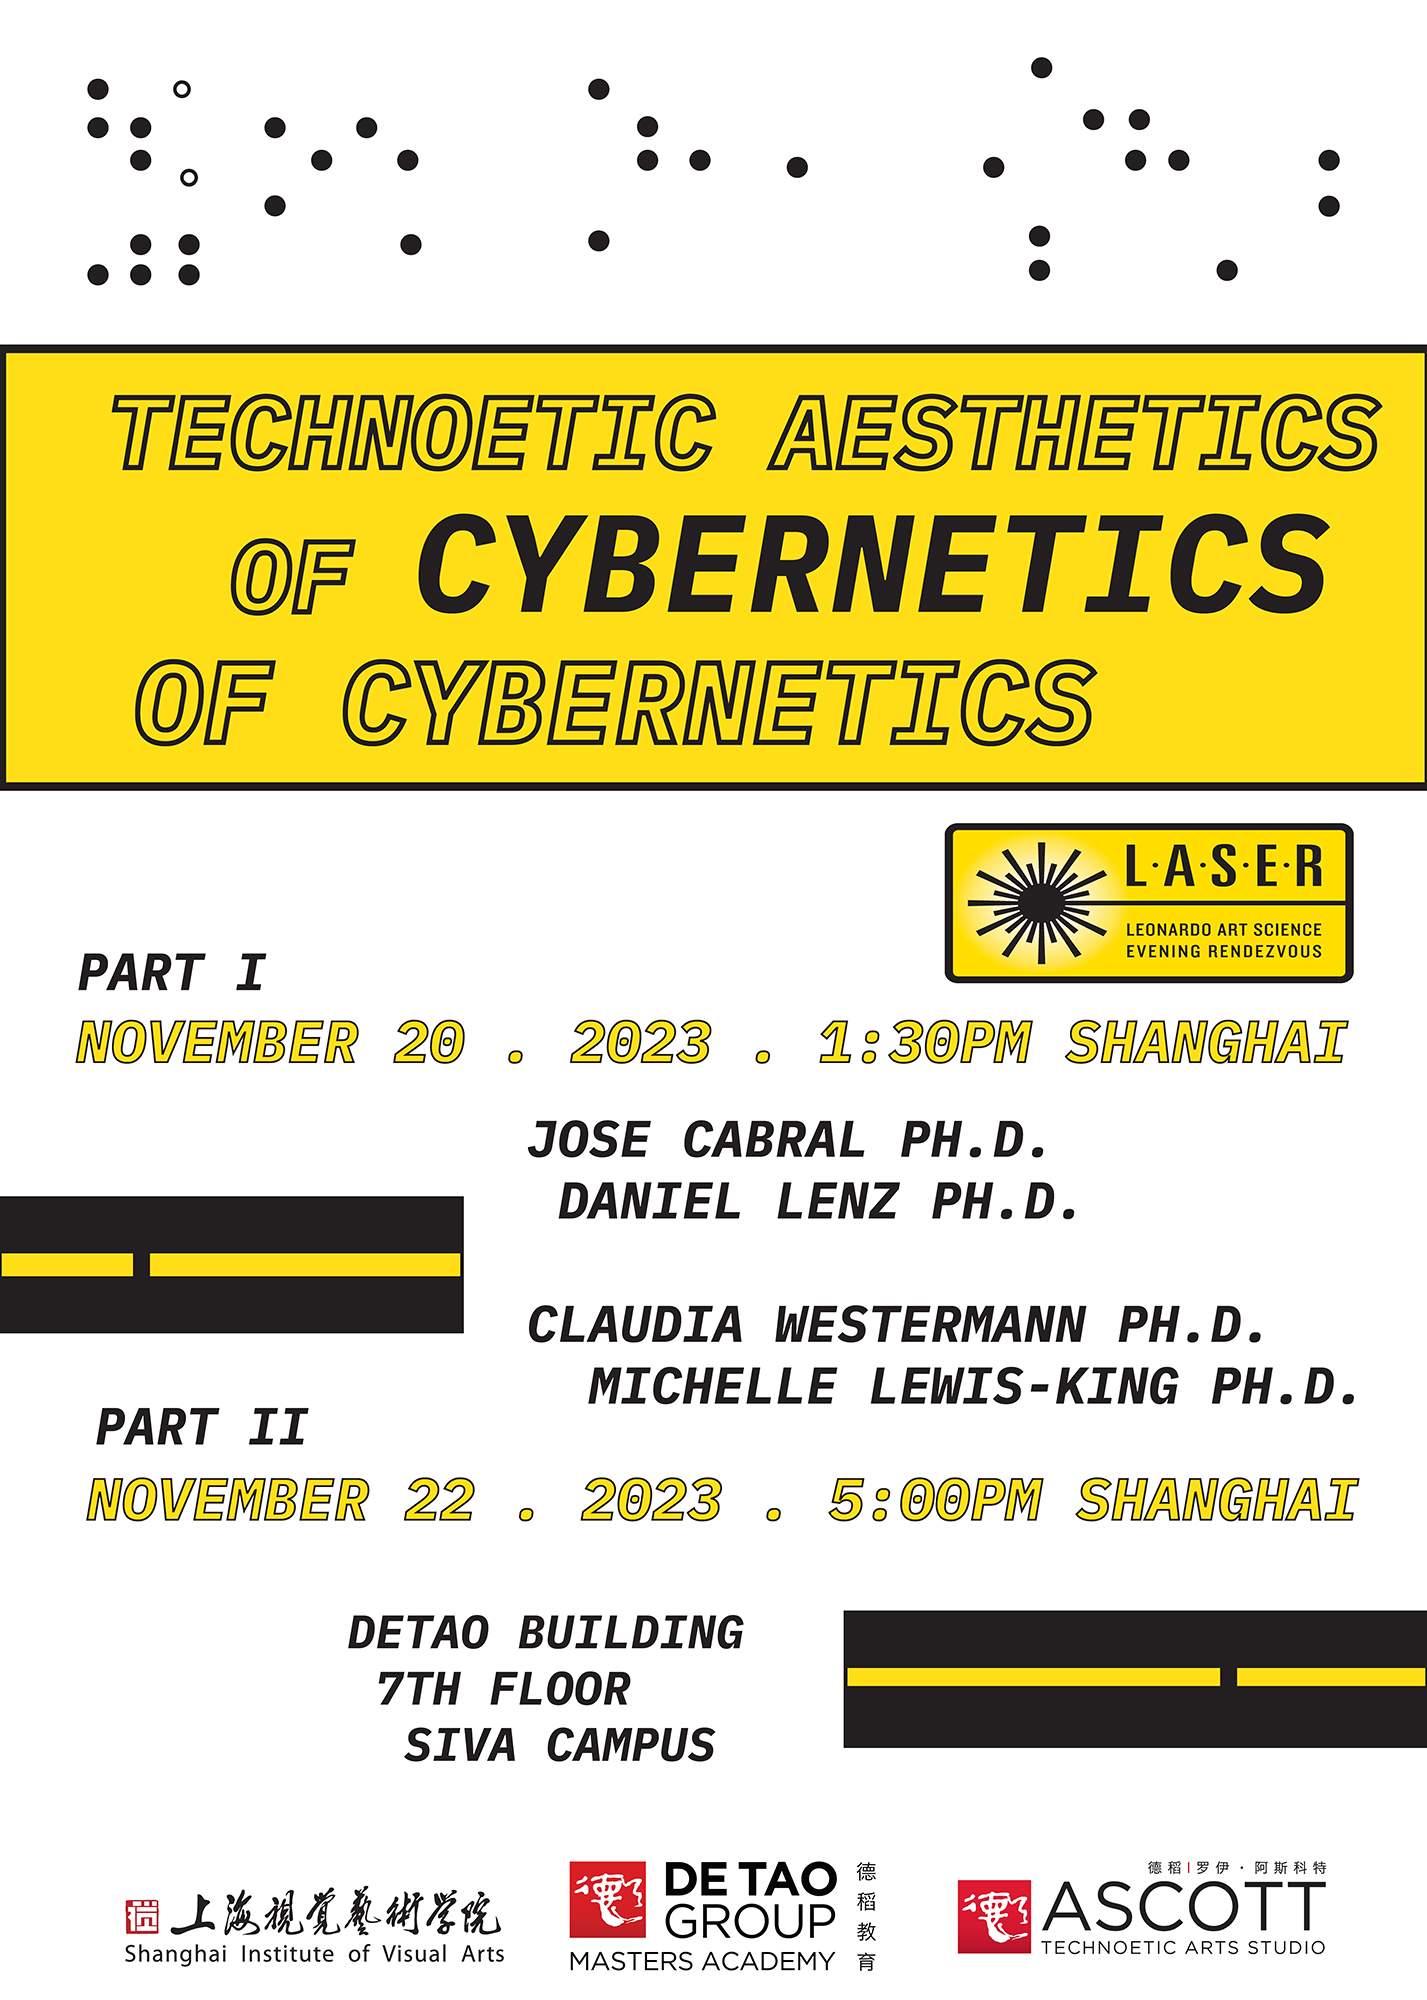 Cybernetics of Cybernetics, Laser Talk, Roy Ascott Studio